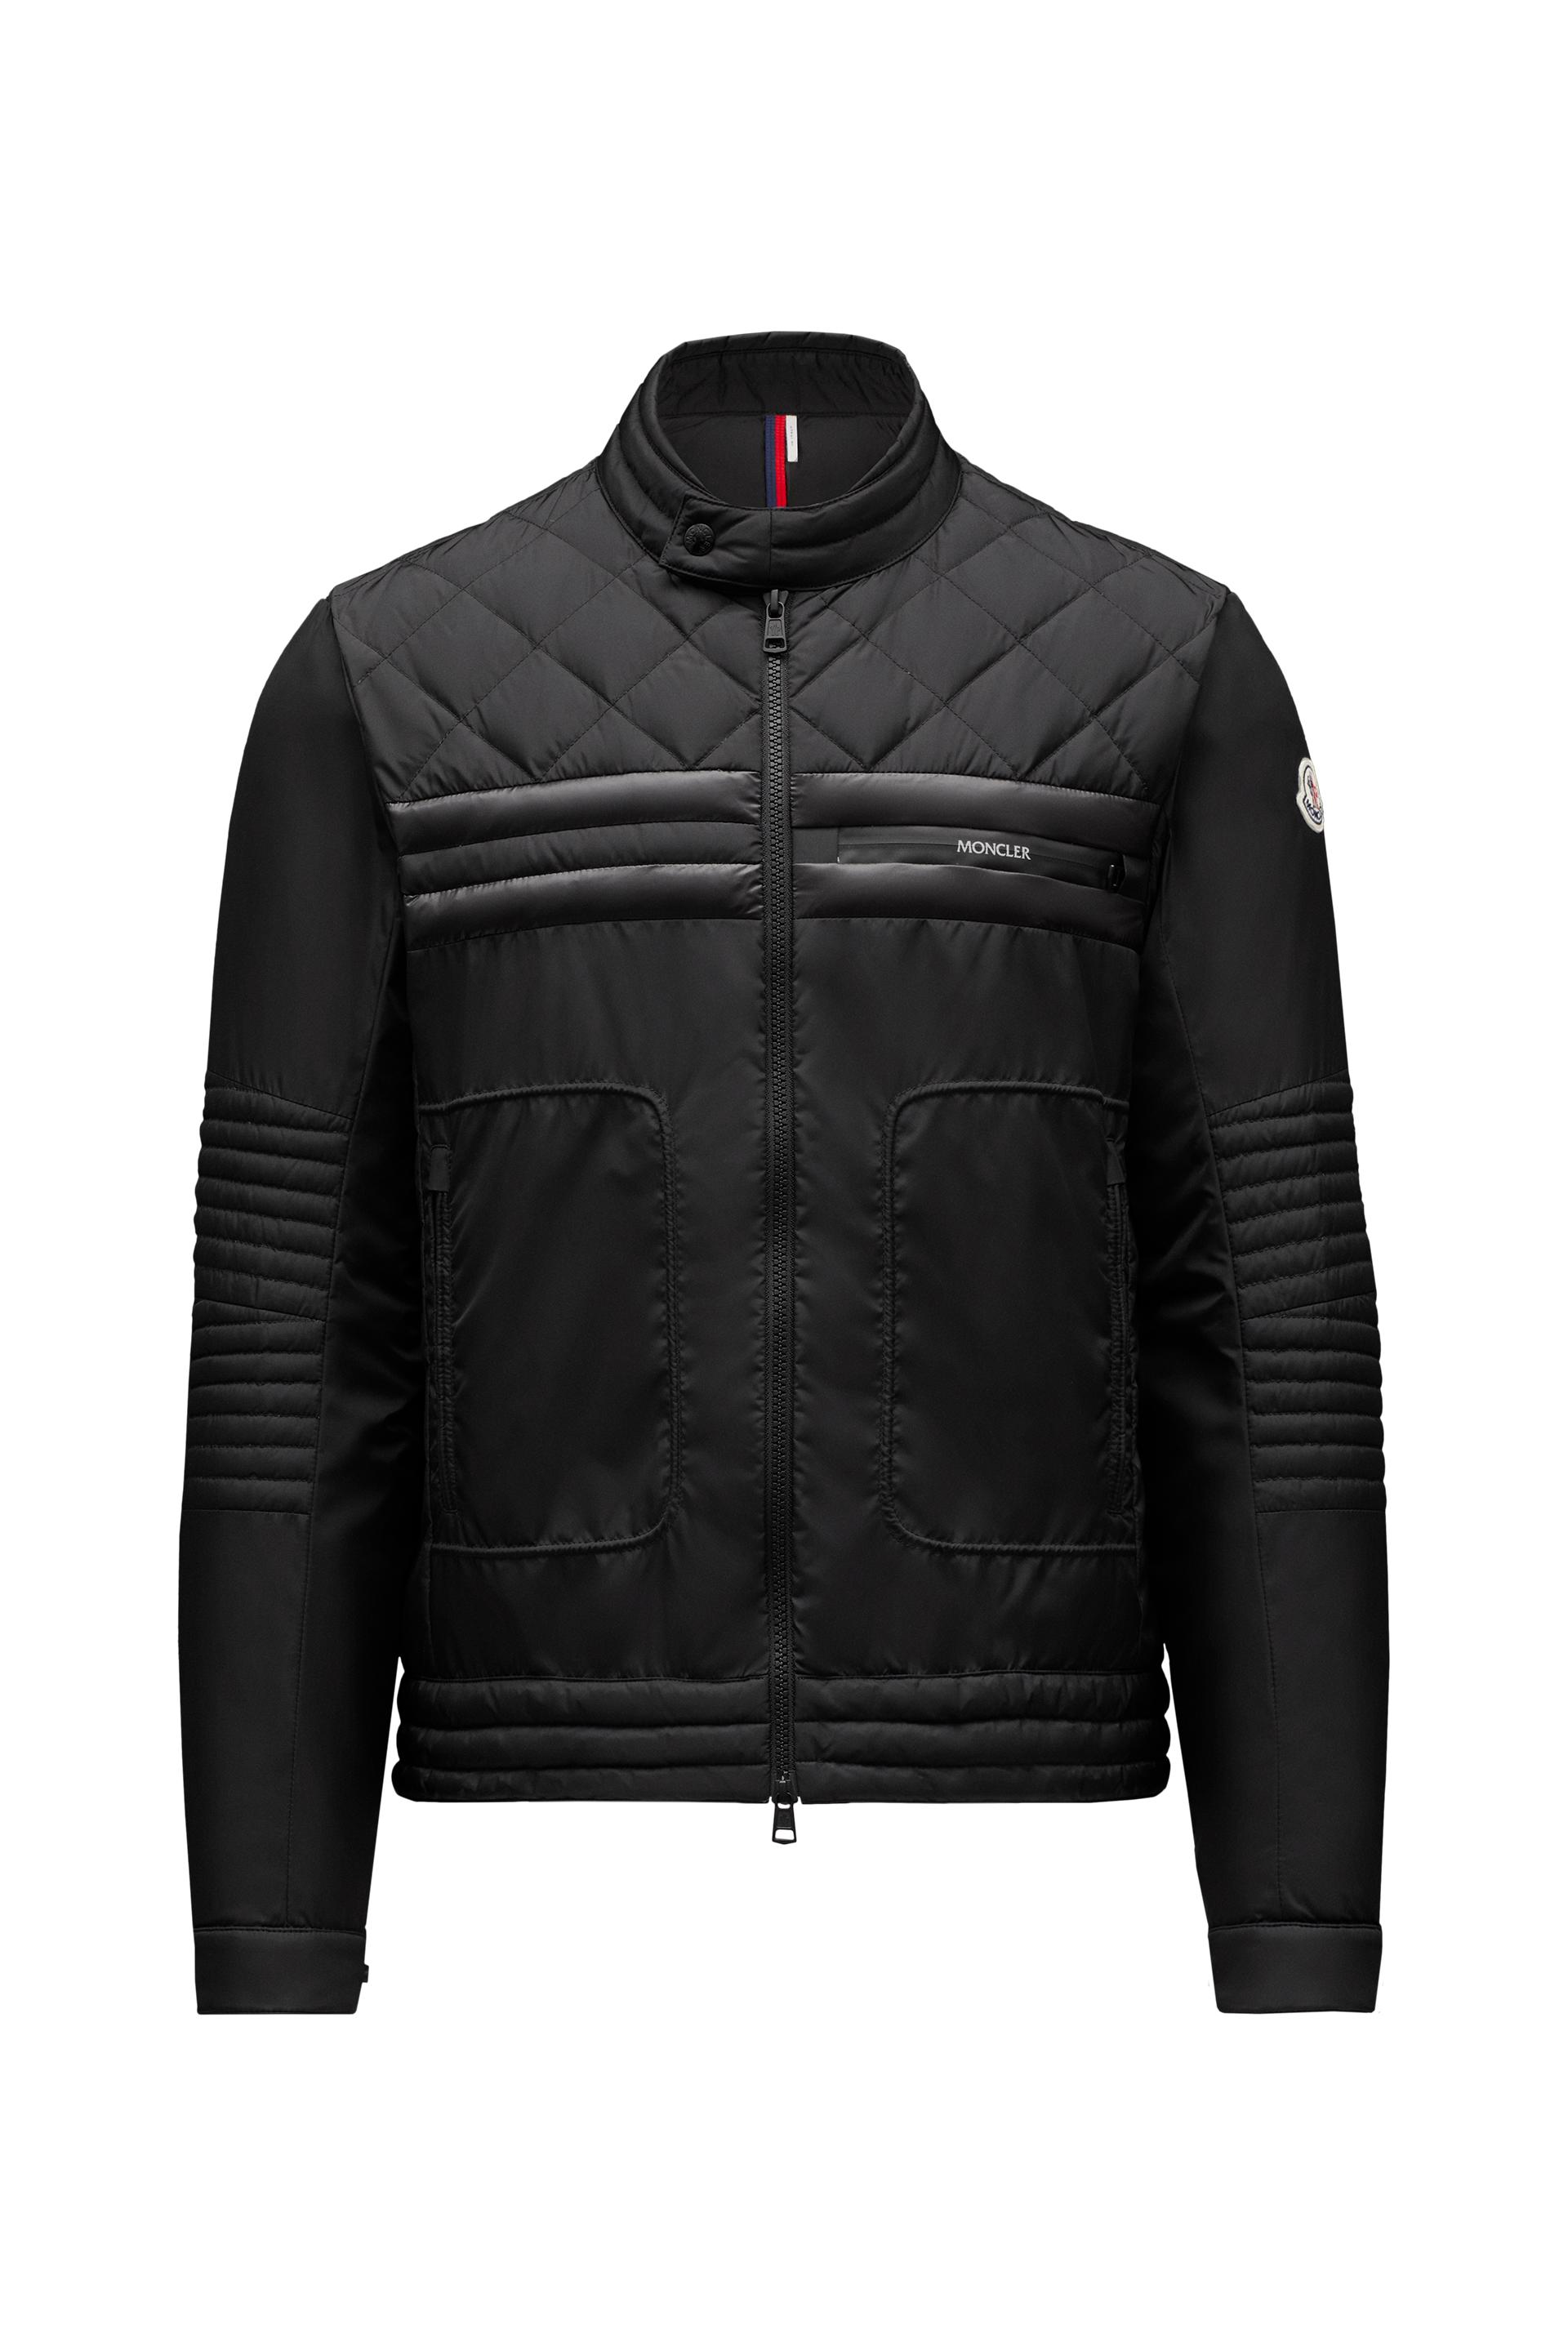 Moncler Atiu Biker Jacket in Black for Men - Lyst